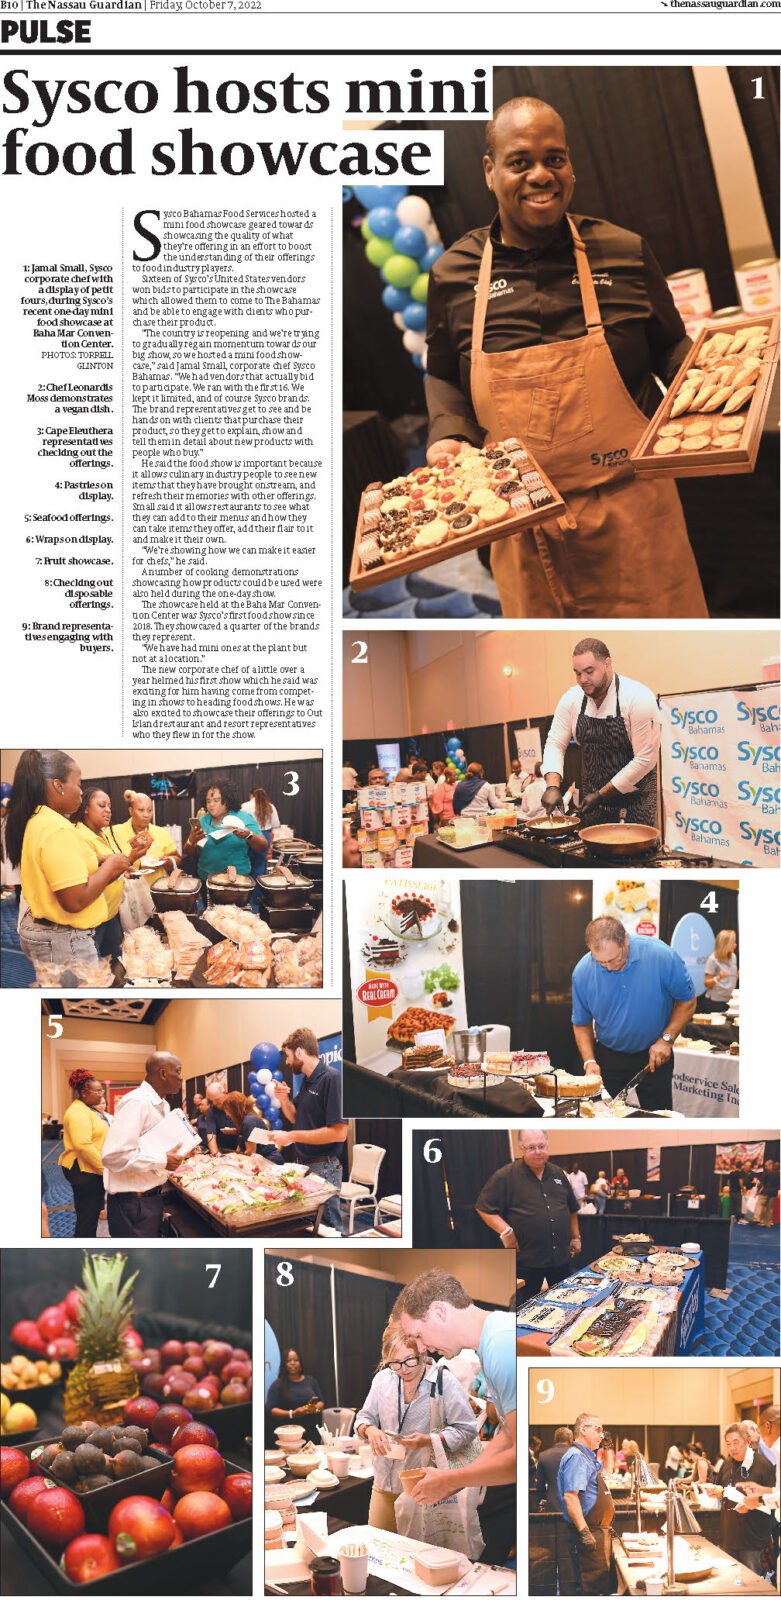 Nassau Guardian (Pulse) article - Sysco Hosts Mini Food Showcase